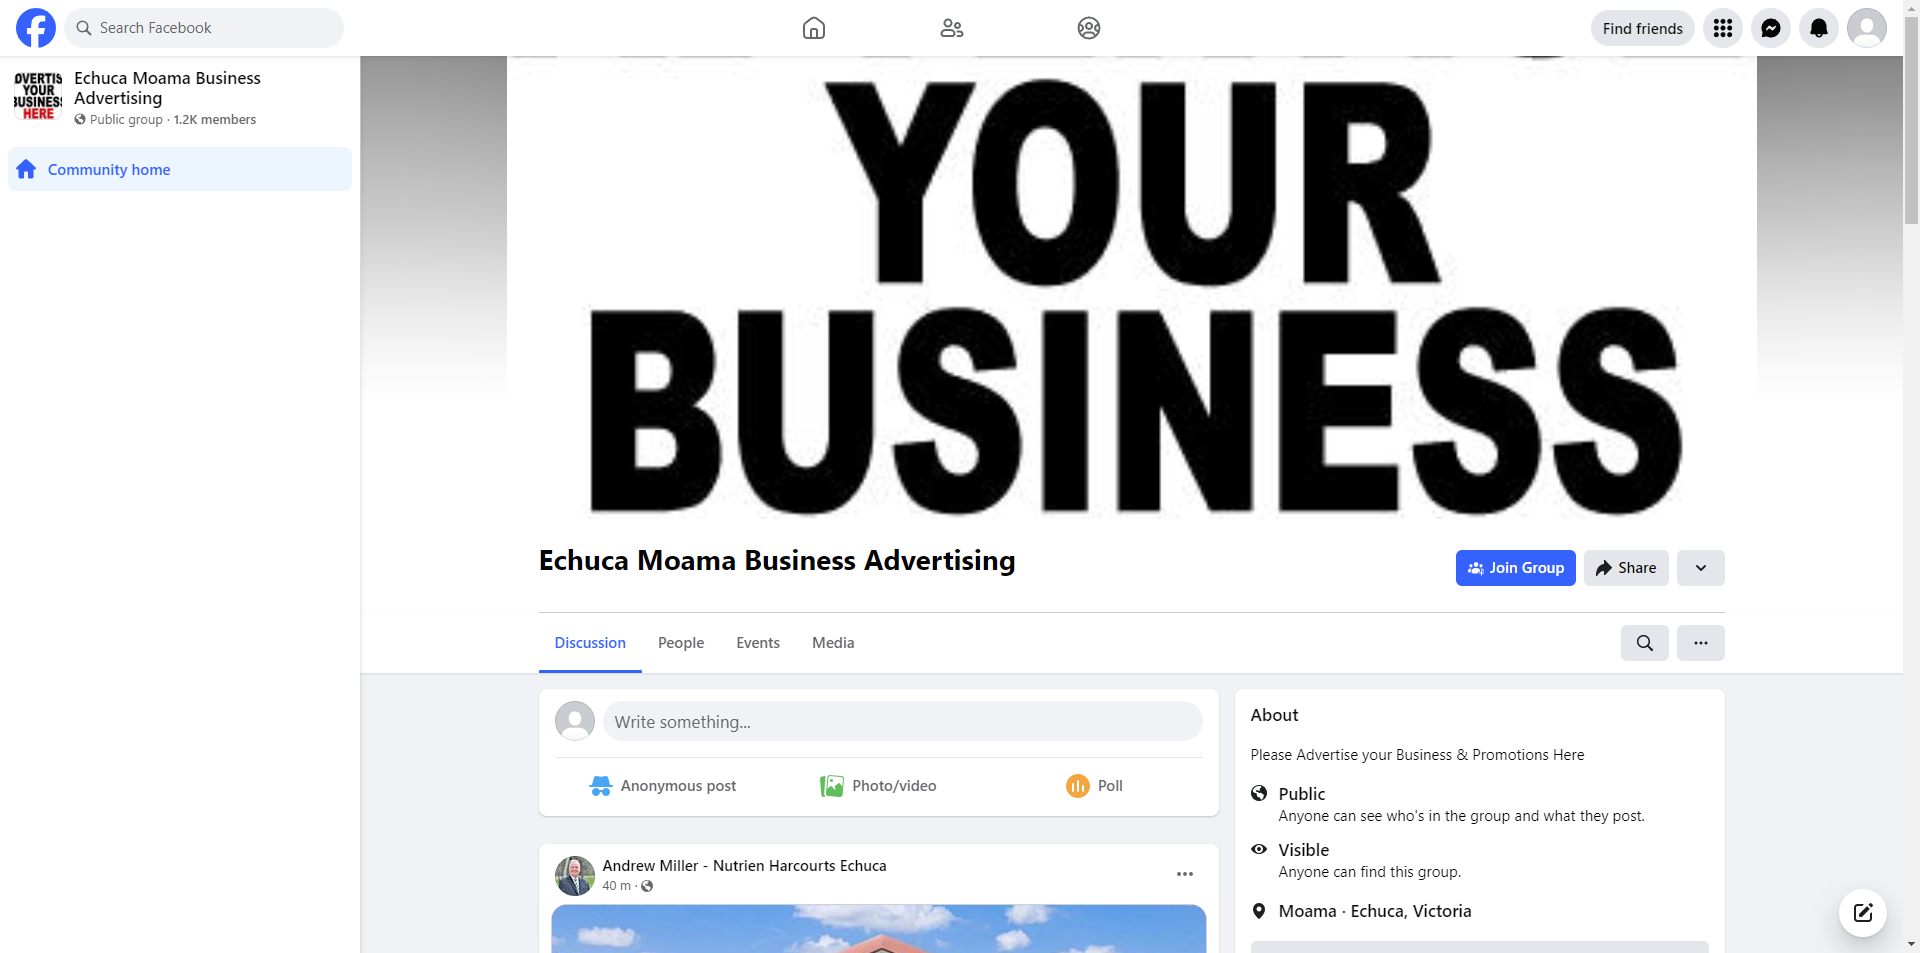 Echuca Moama Business Advertising